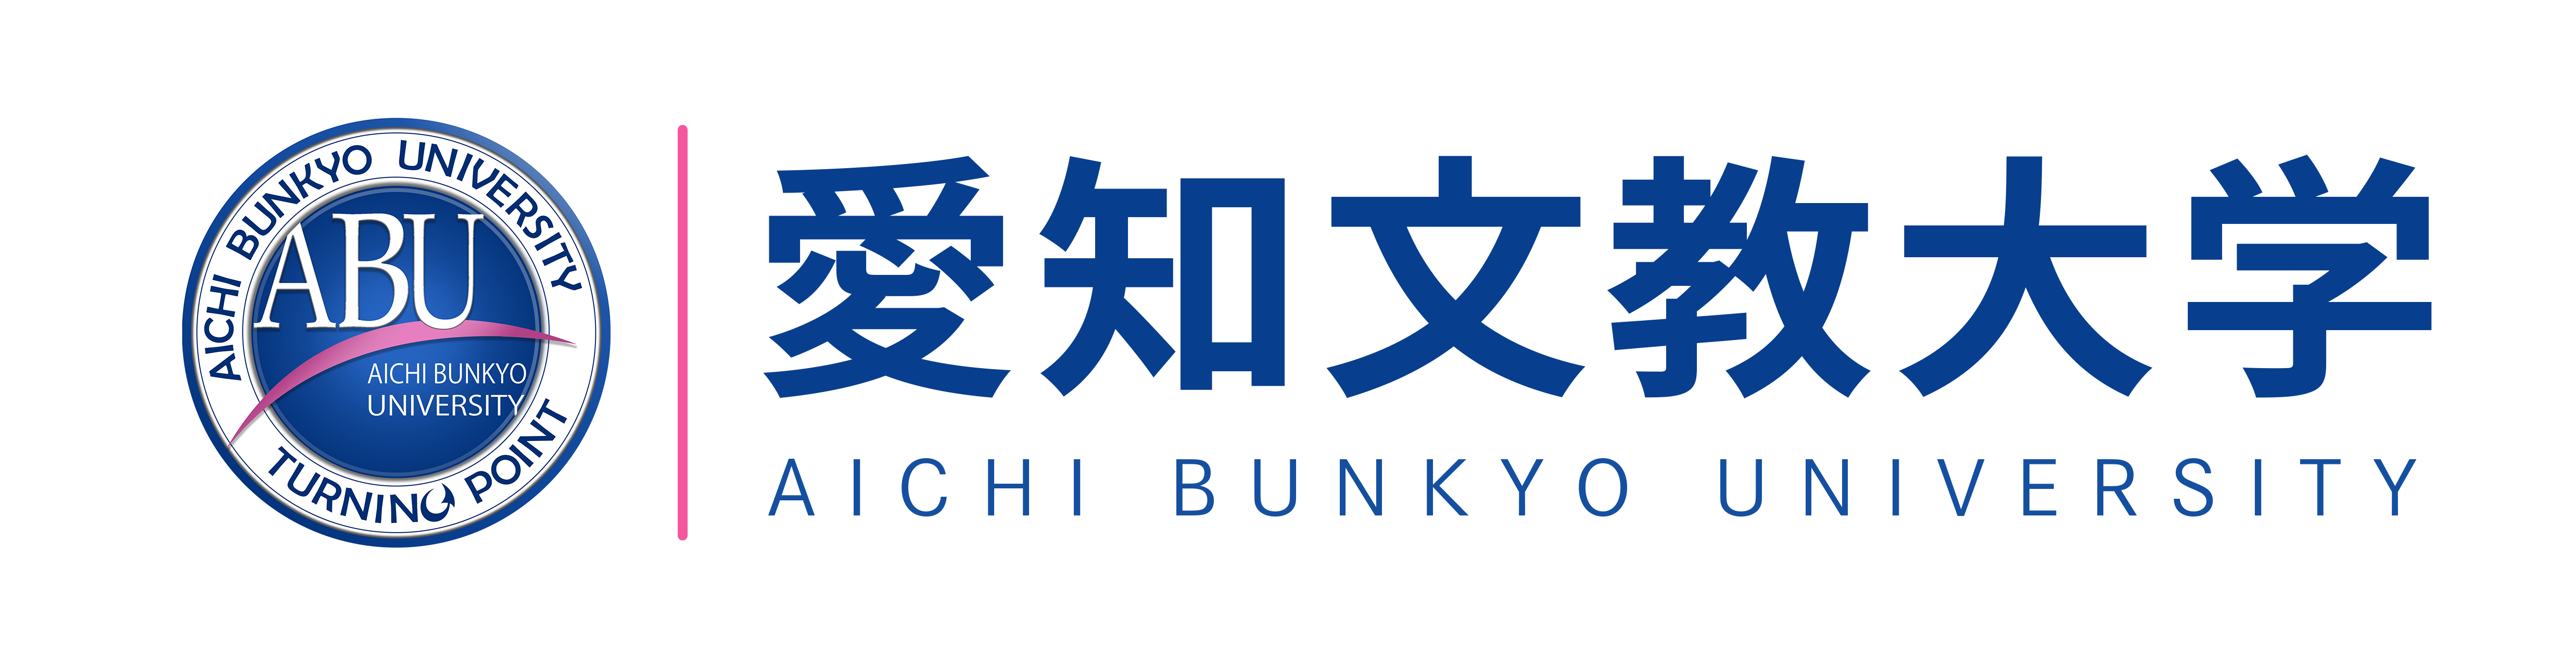 Aichi Bunkyo University Japan